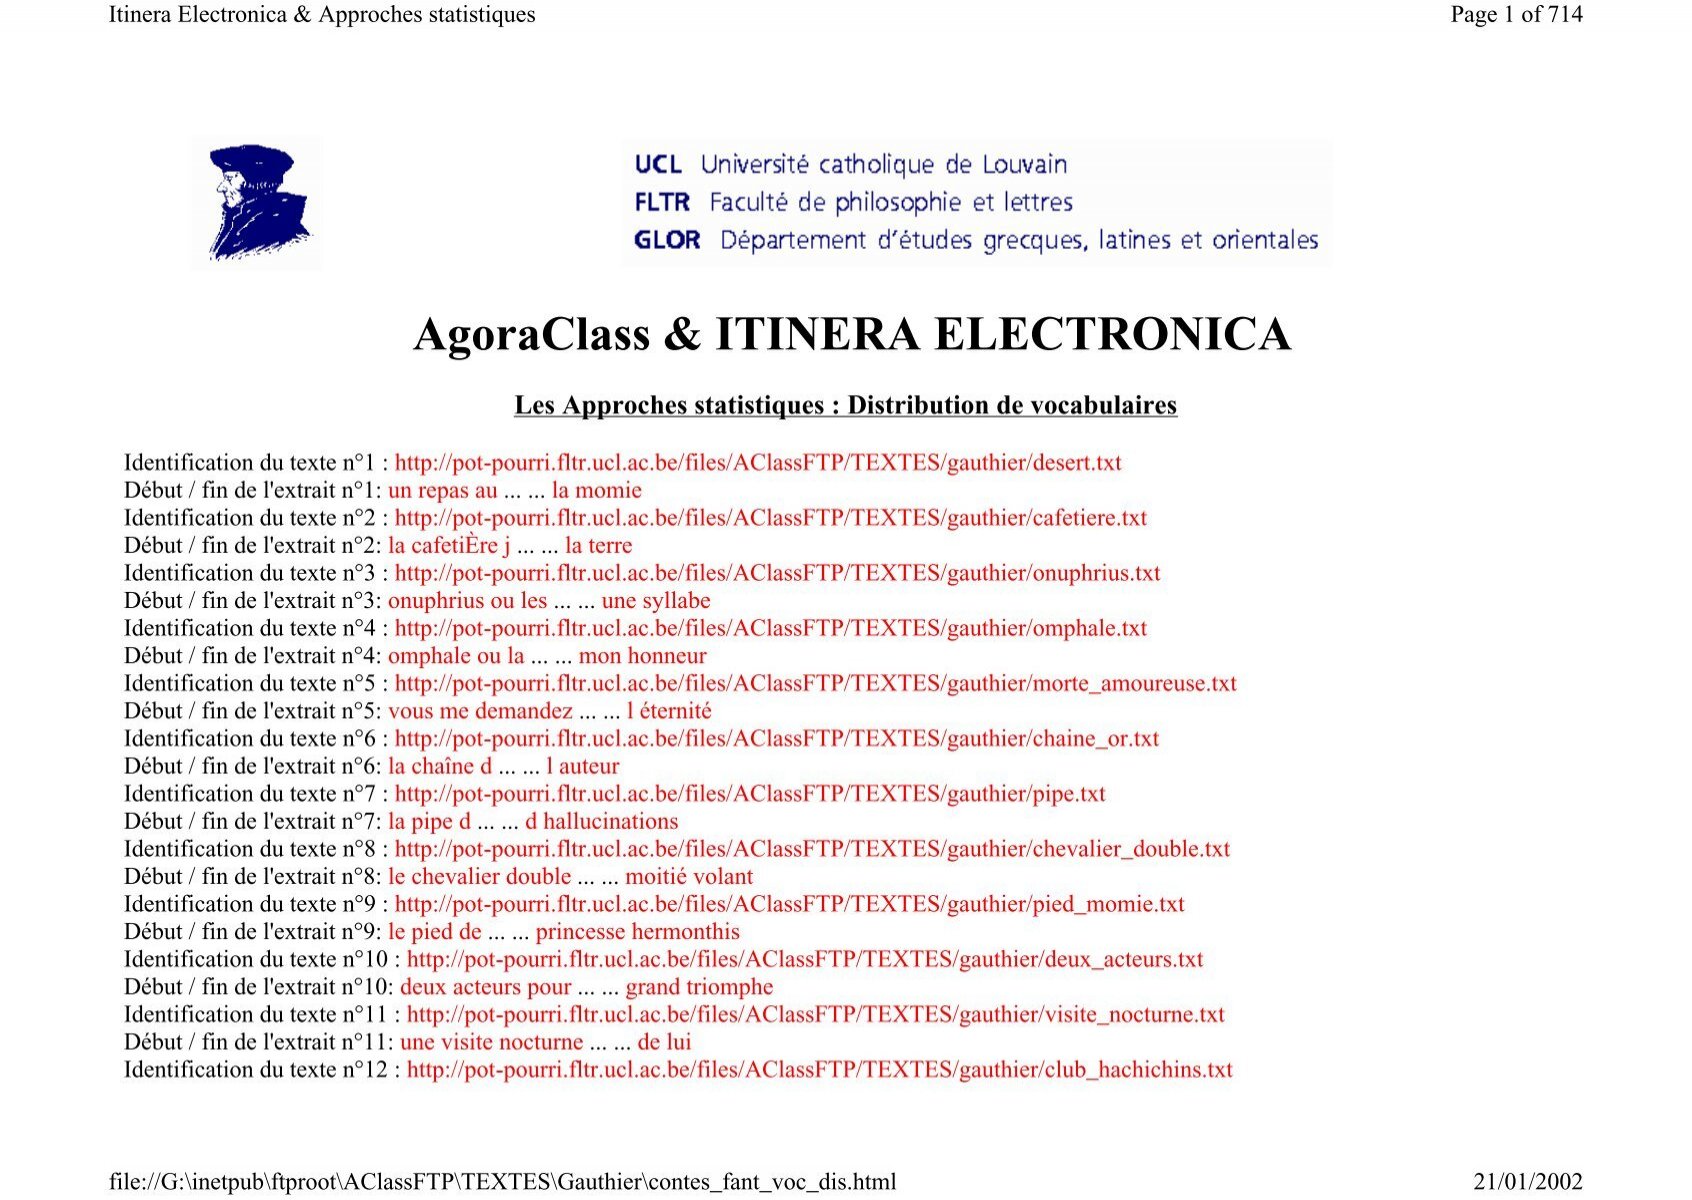 AgoraClass & ITINERA ELECTRONICA - Pot-pourri - UCL